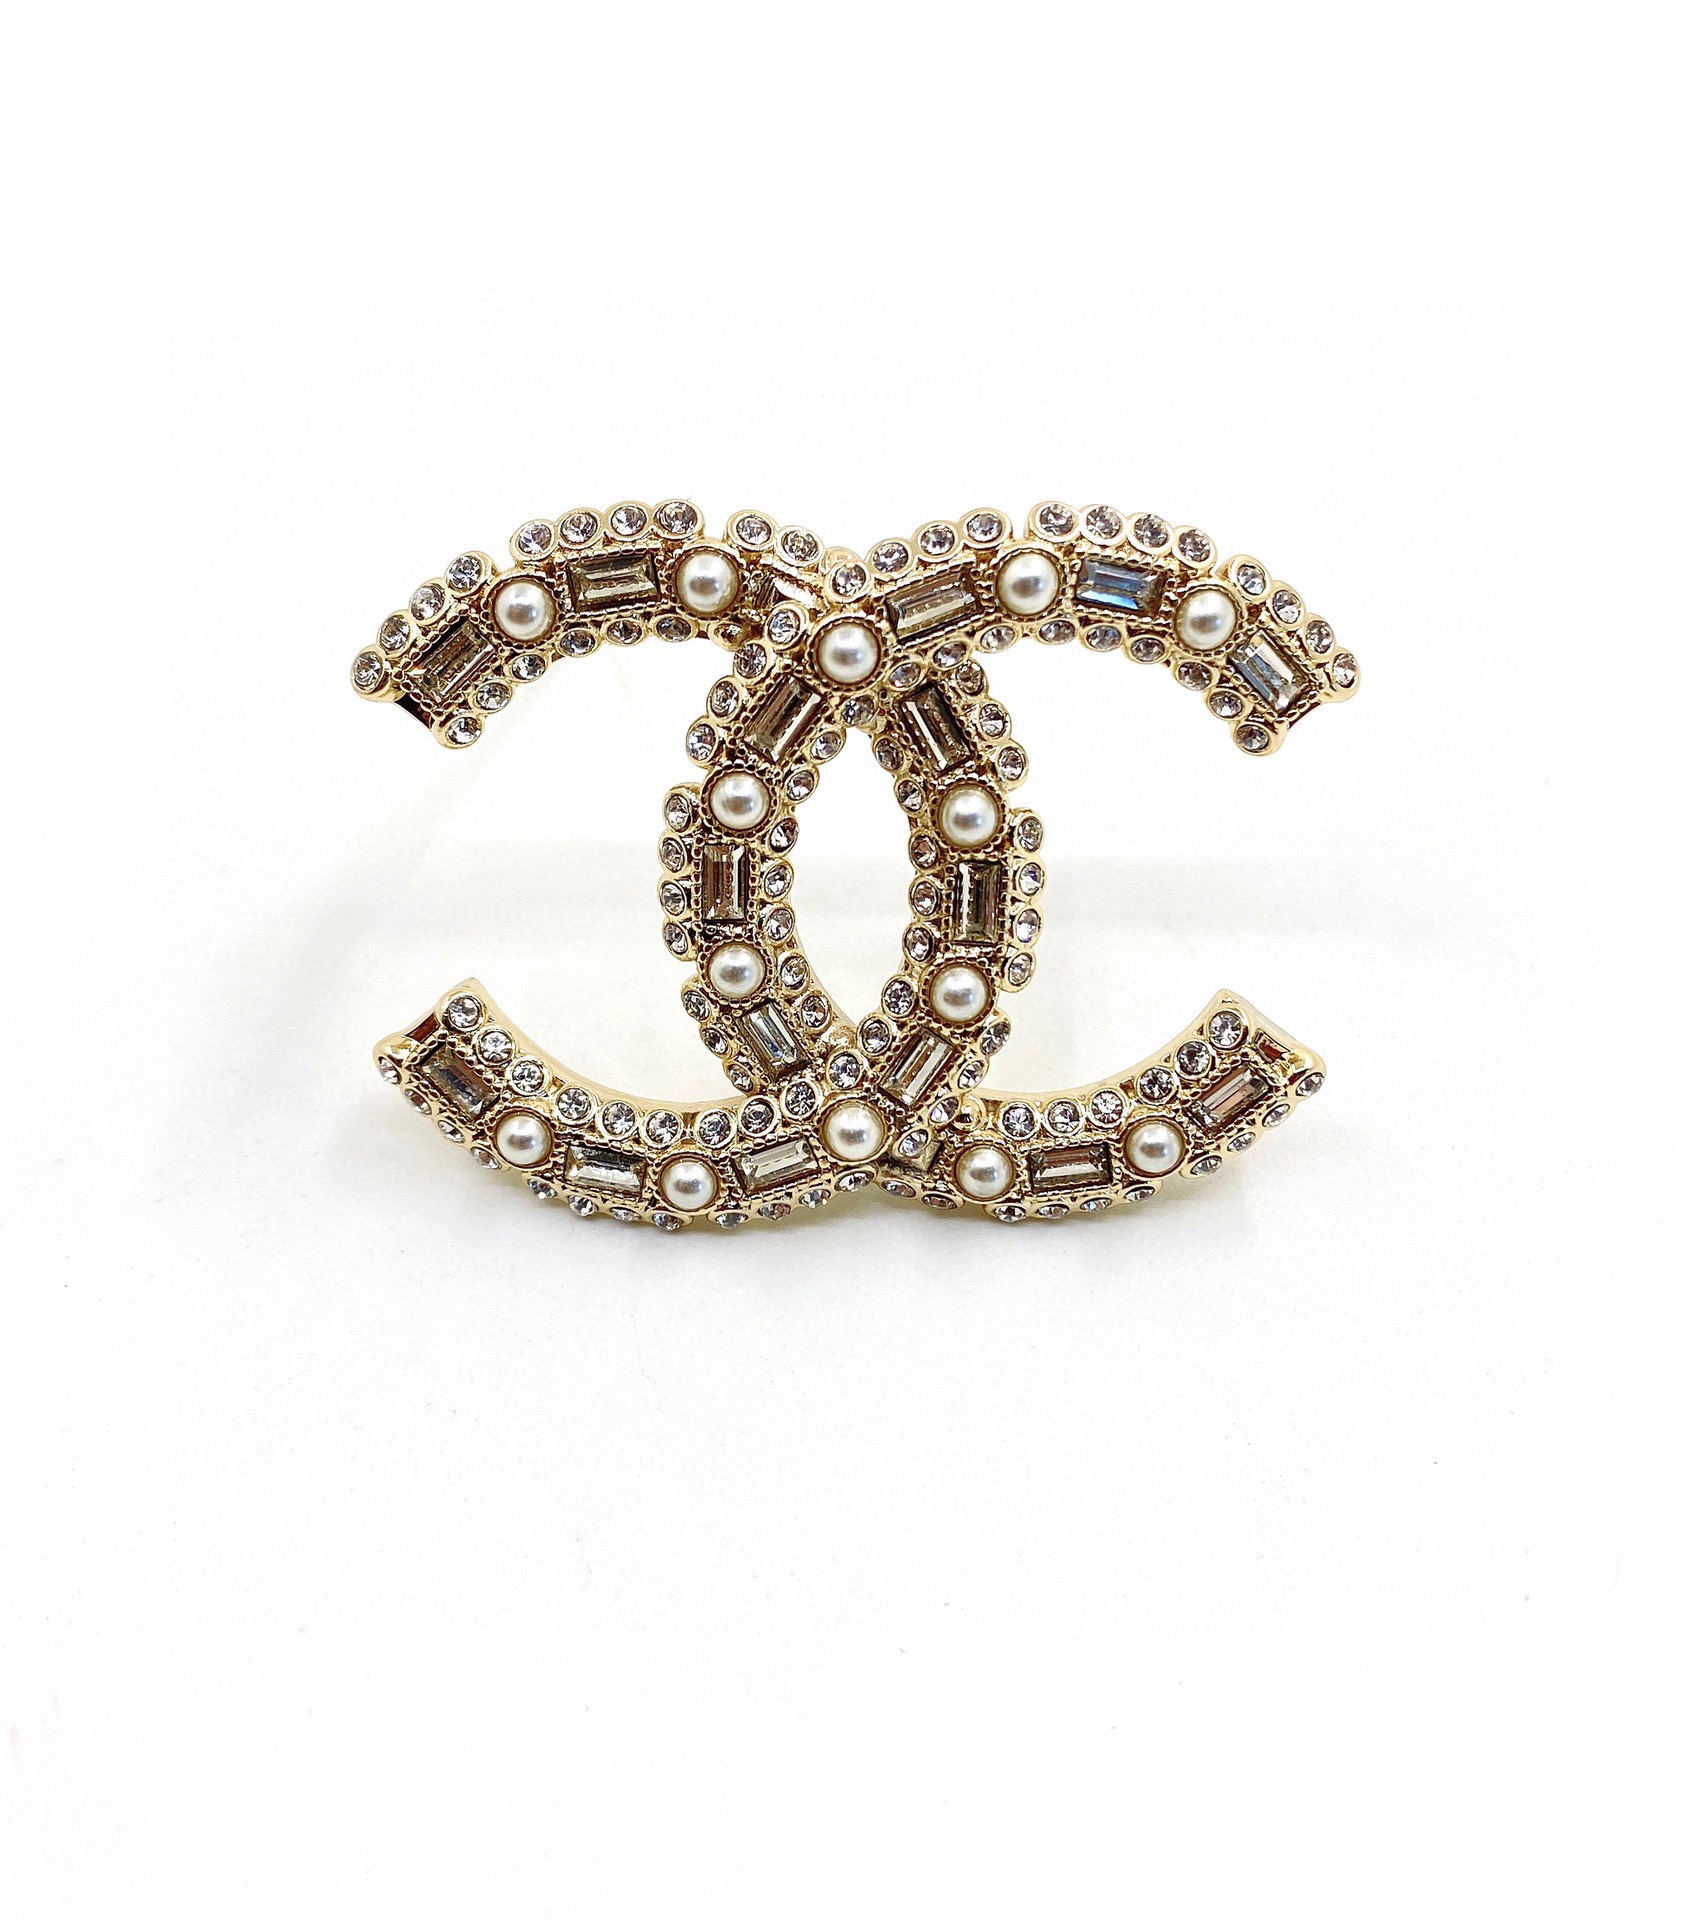 Chanel pin brooch